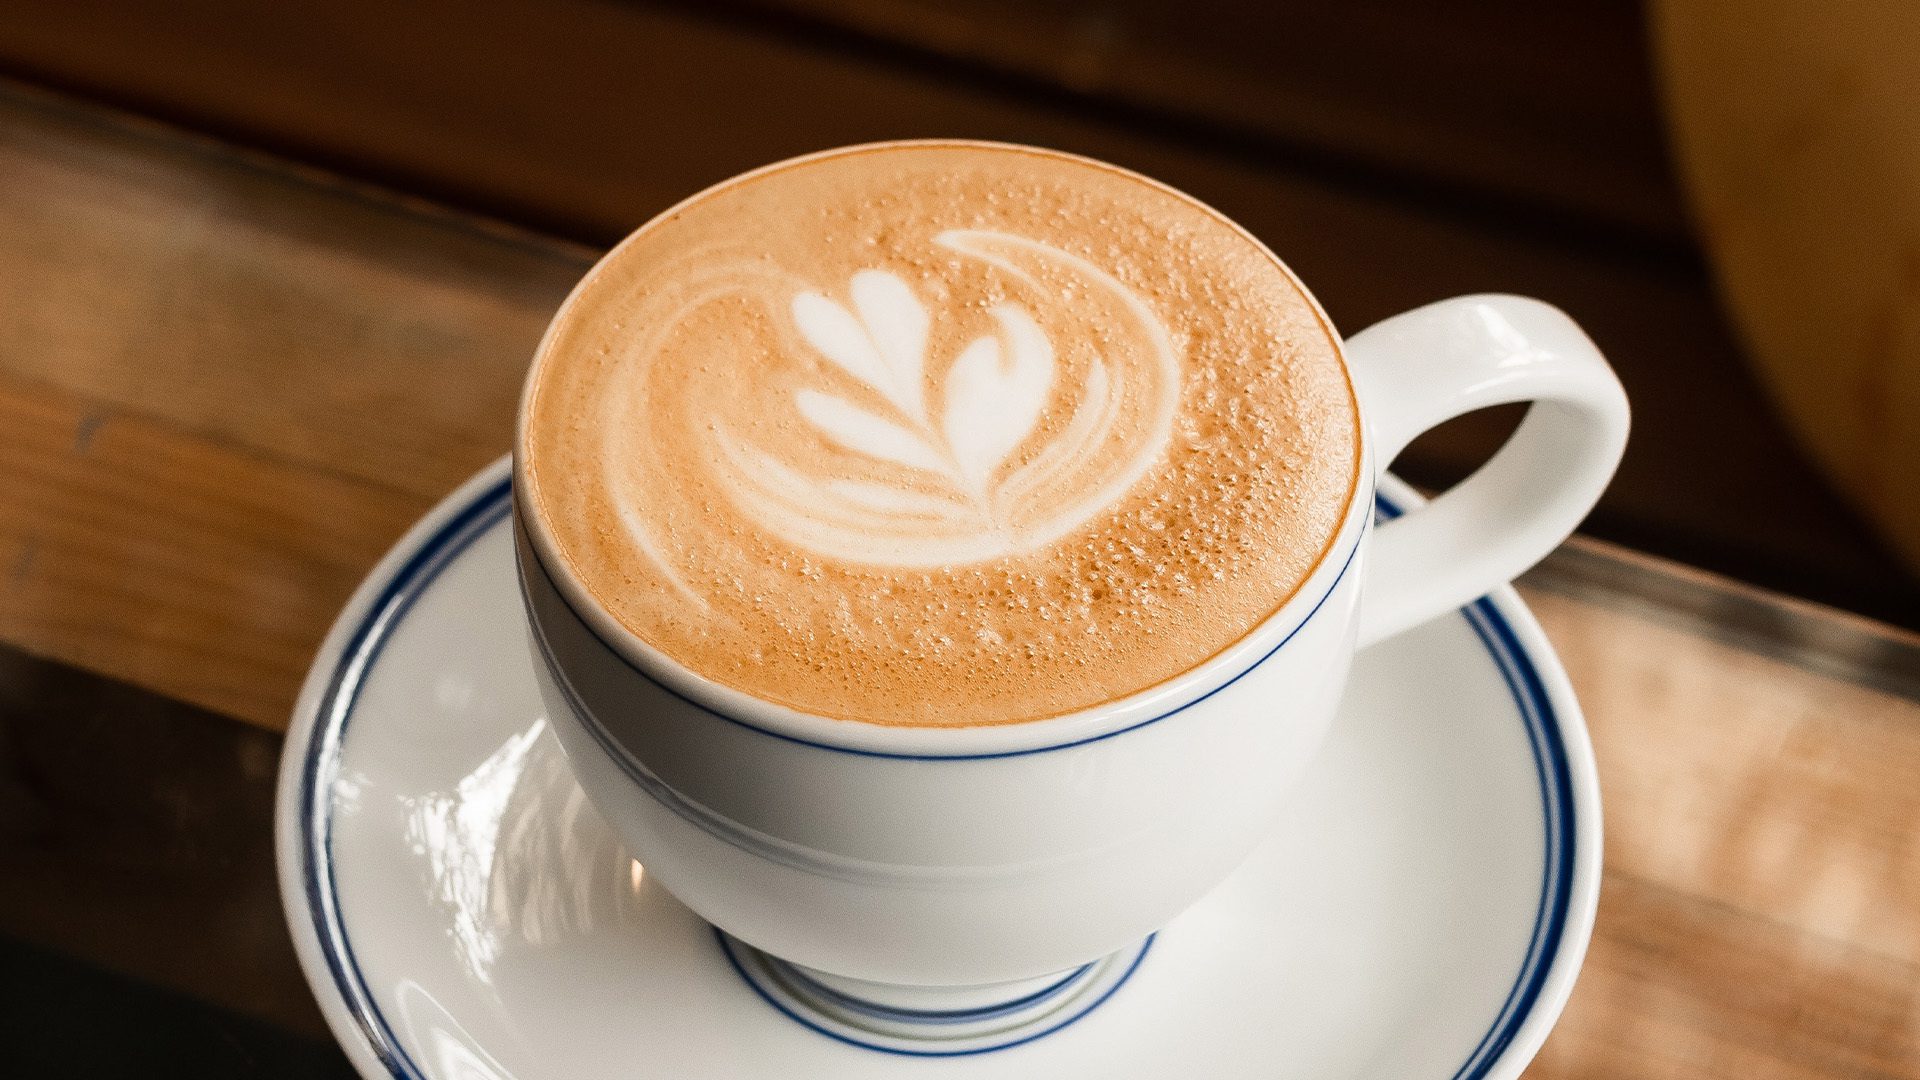 coffee with foam art in a mug